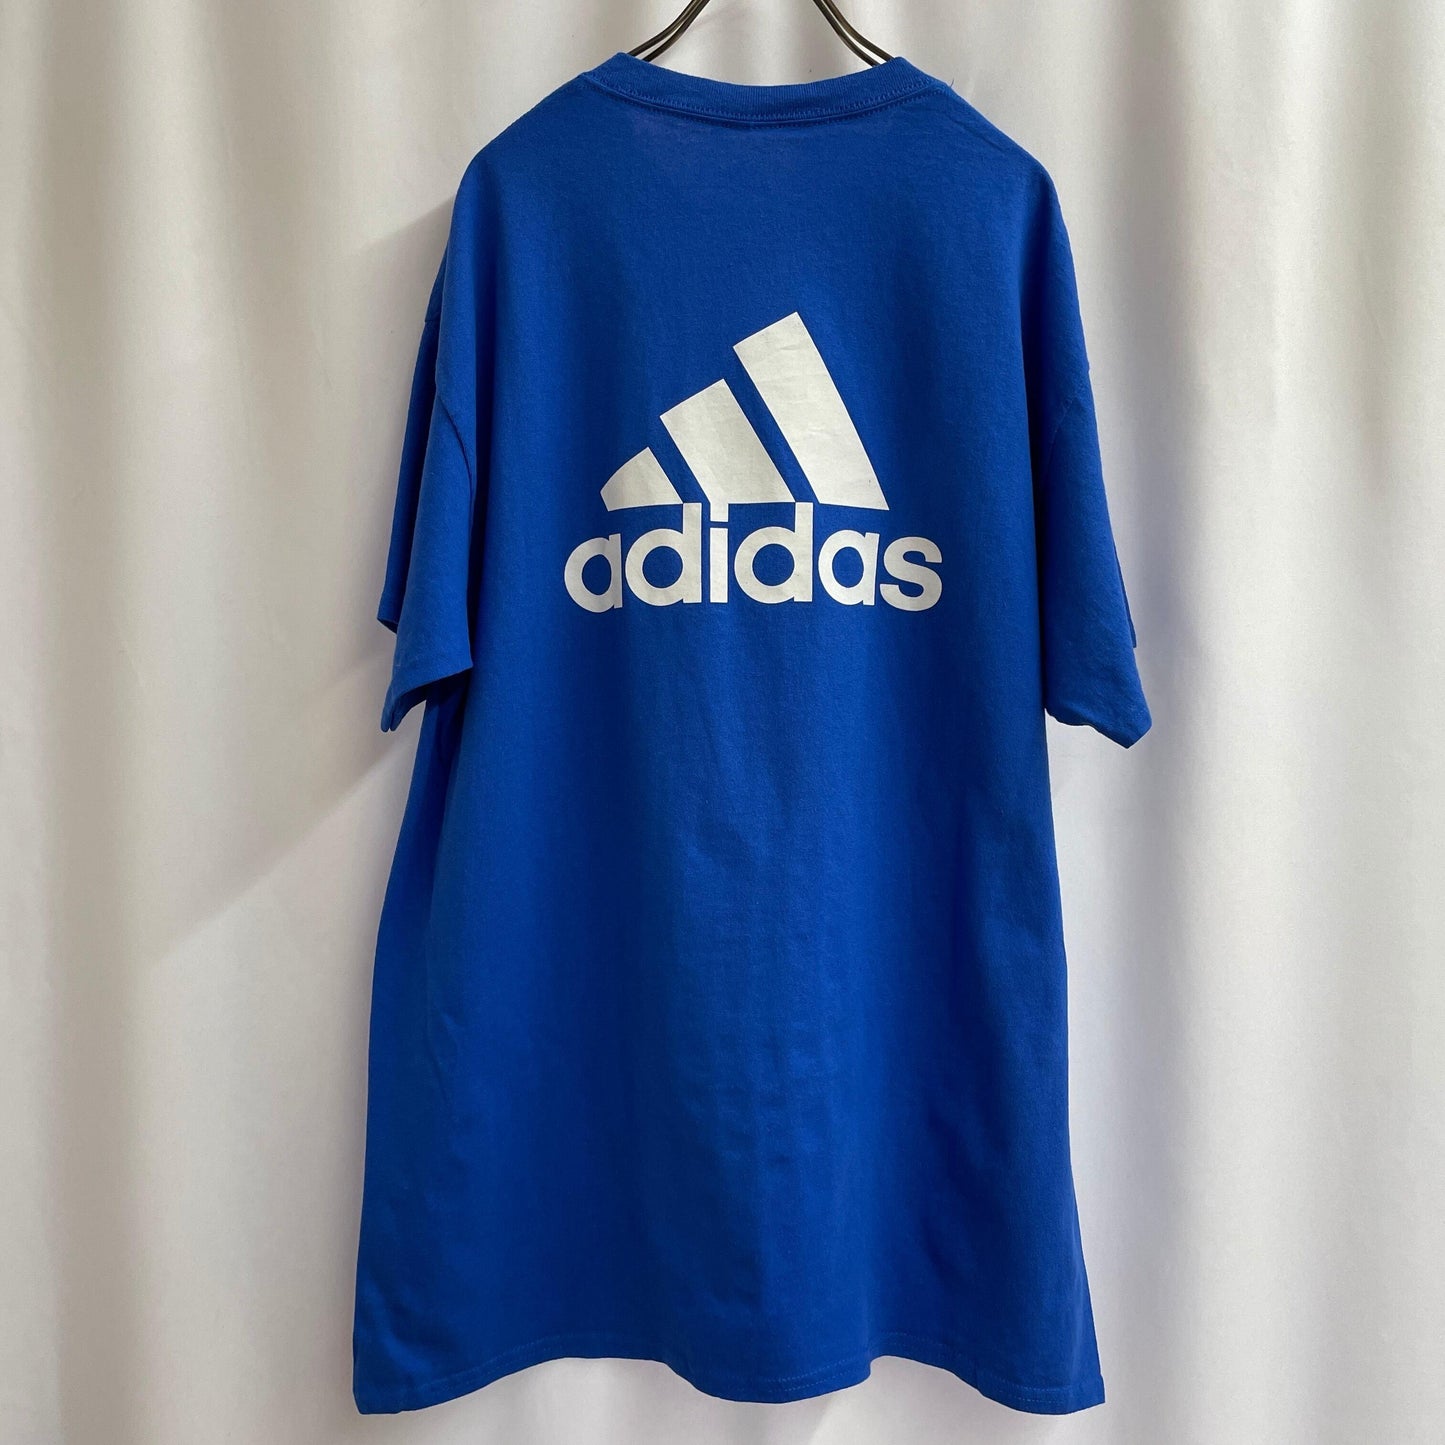 adodas Tee US Youth soccer L size T-shirt blue Blue